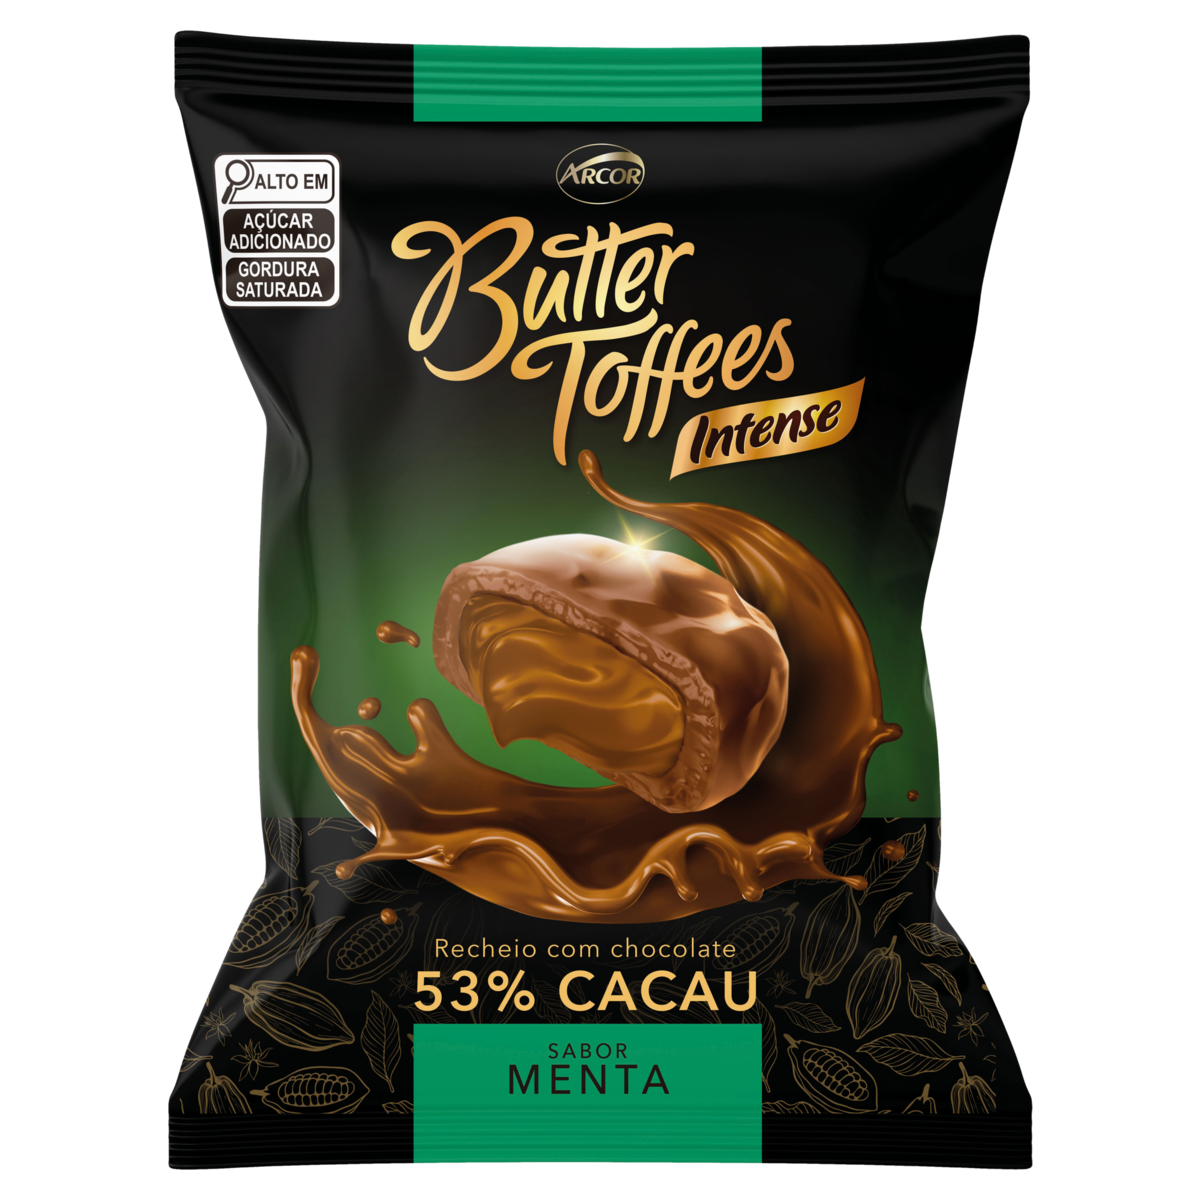 7891118026302 - BALA MENTA RECHEIO CHOCOLATE 53% CACAU BUTTER TOFFEES INTENSE PACOTE 90G